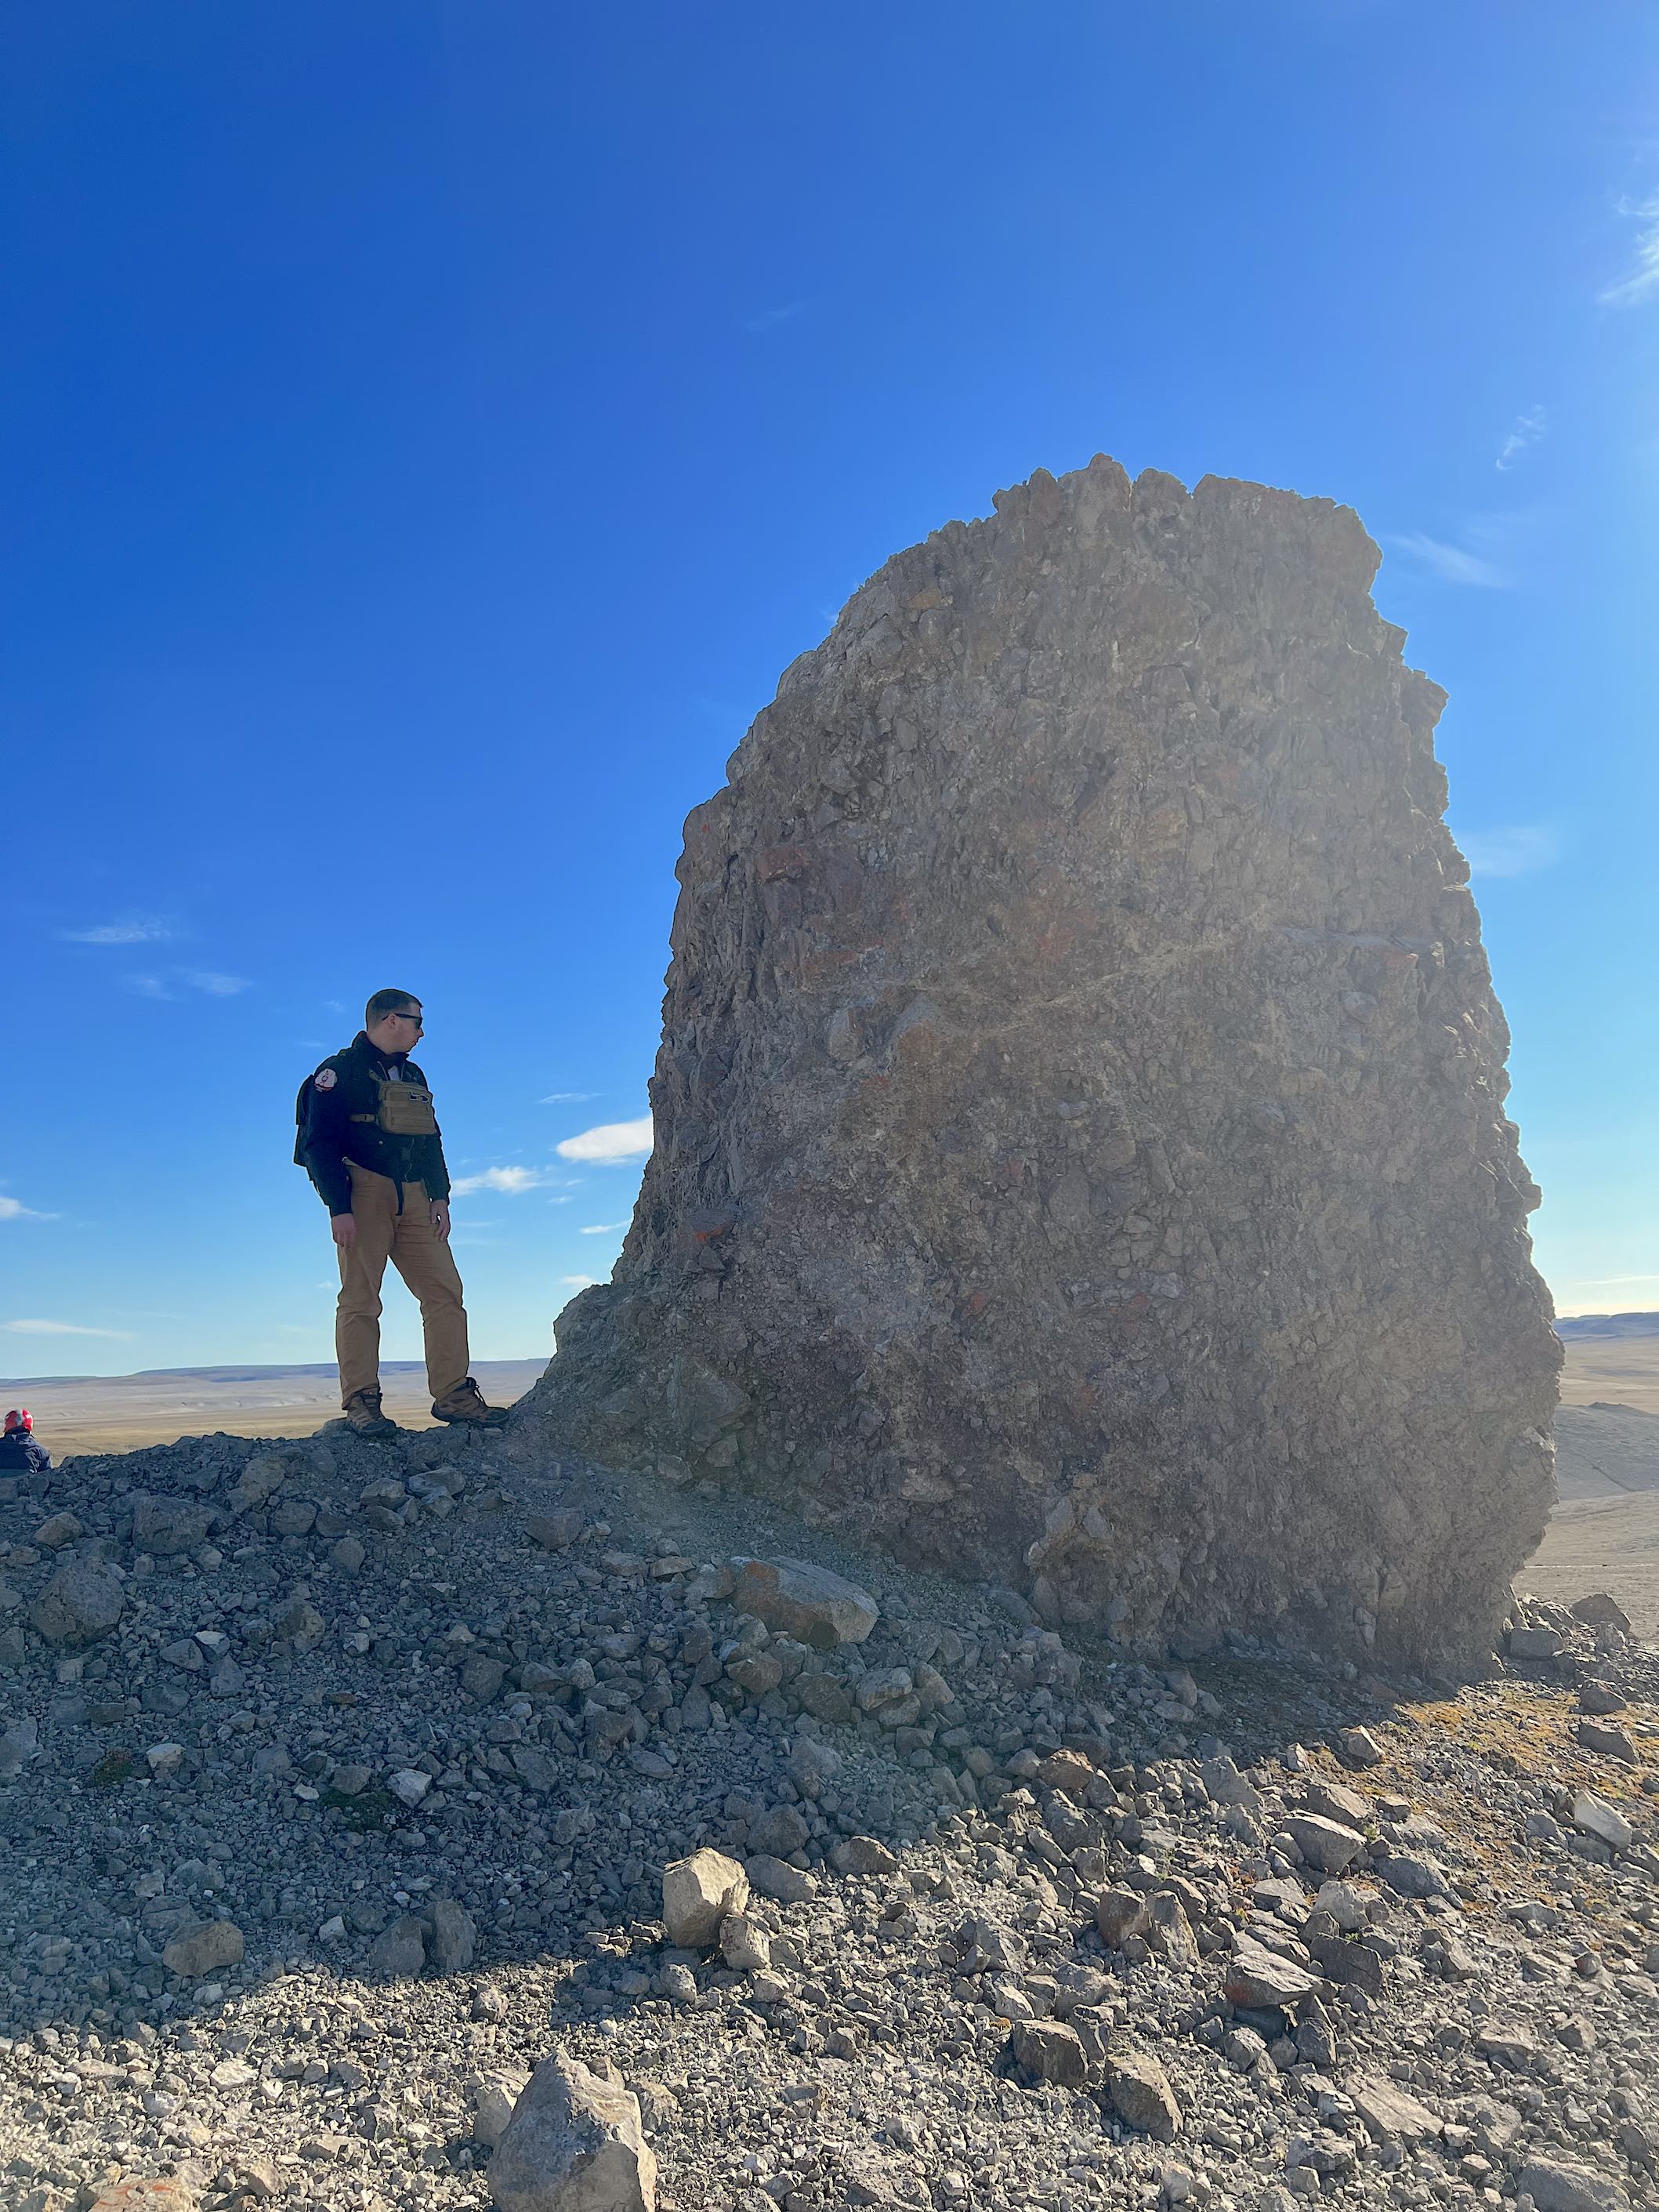 A man stands next to a large boulder